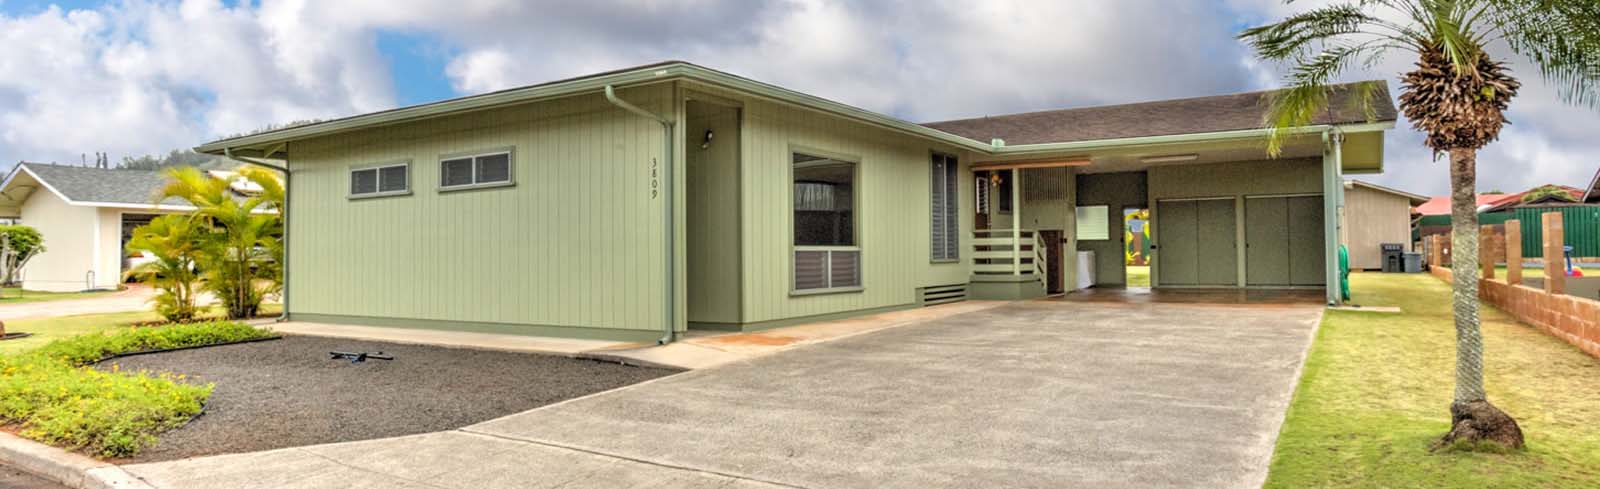 Home for Sale Kauai